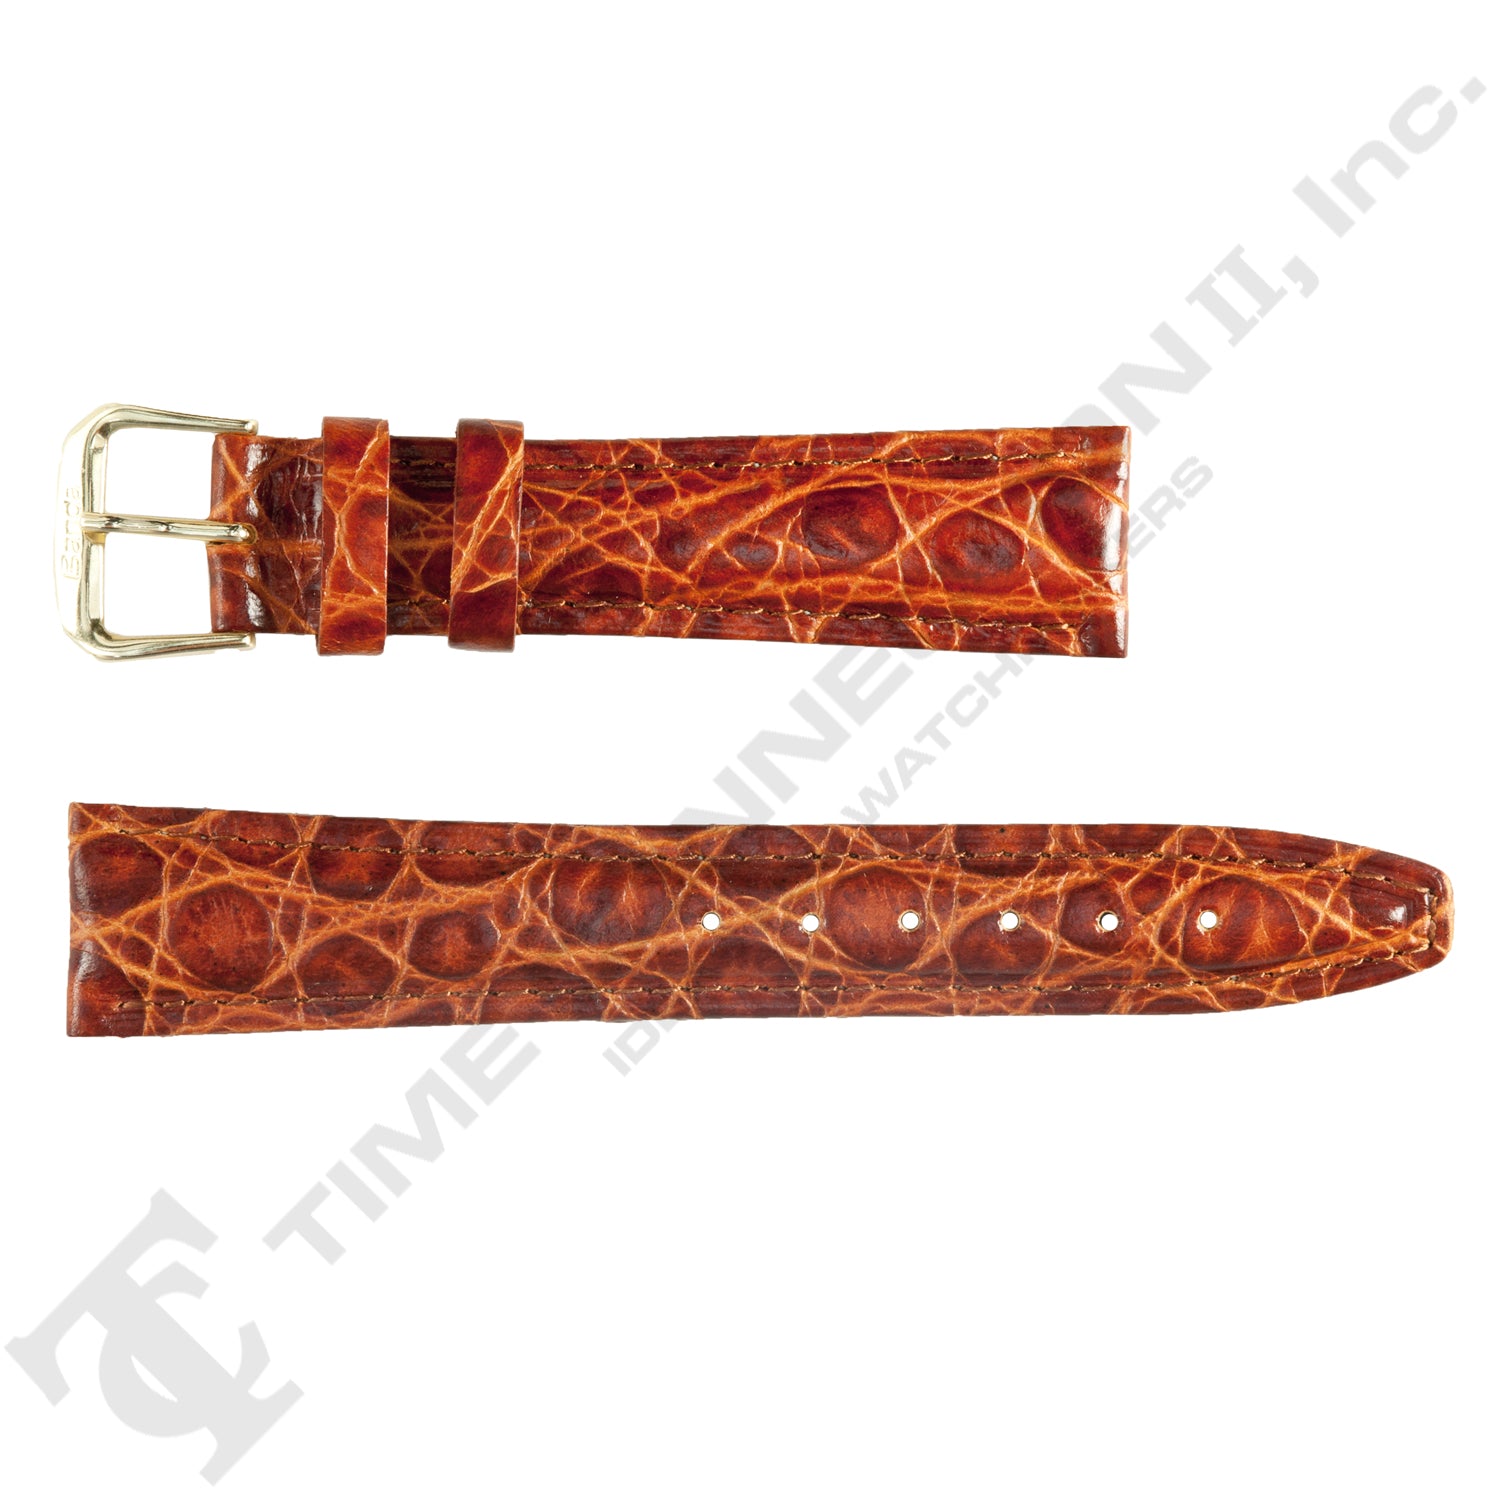 Banda No. 113 African Crocodile Grain Leather Straps (10mm~19mm)